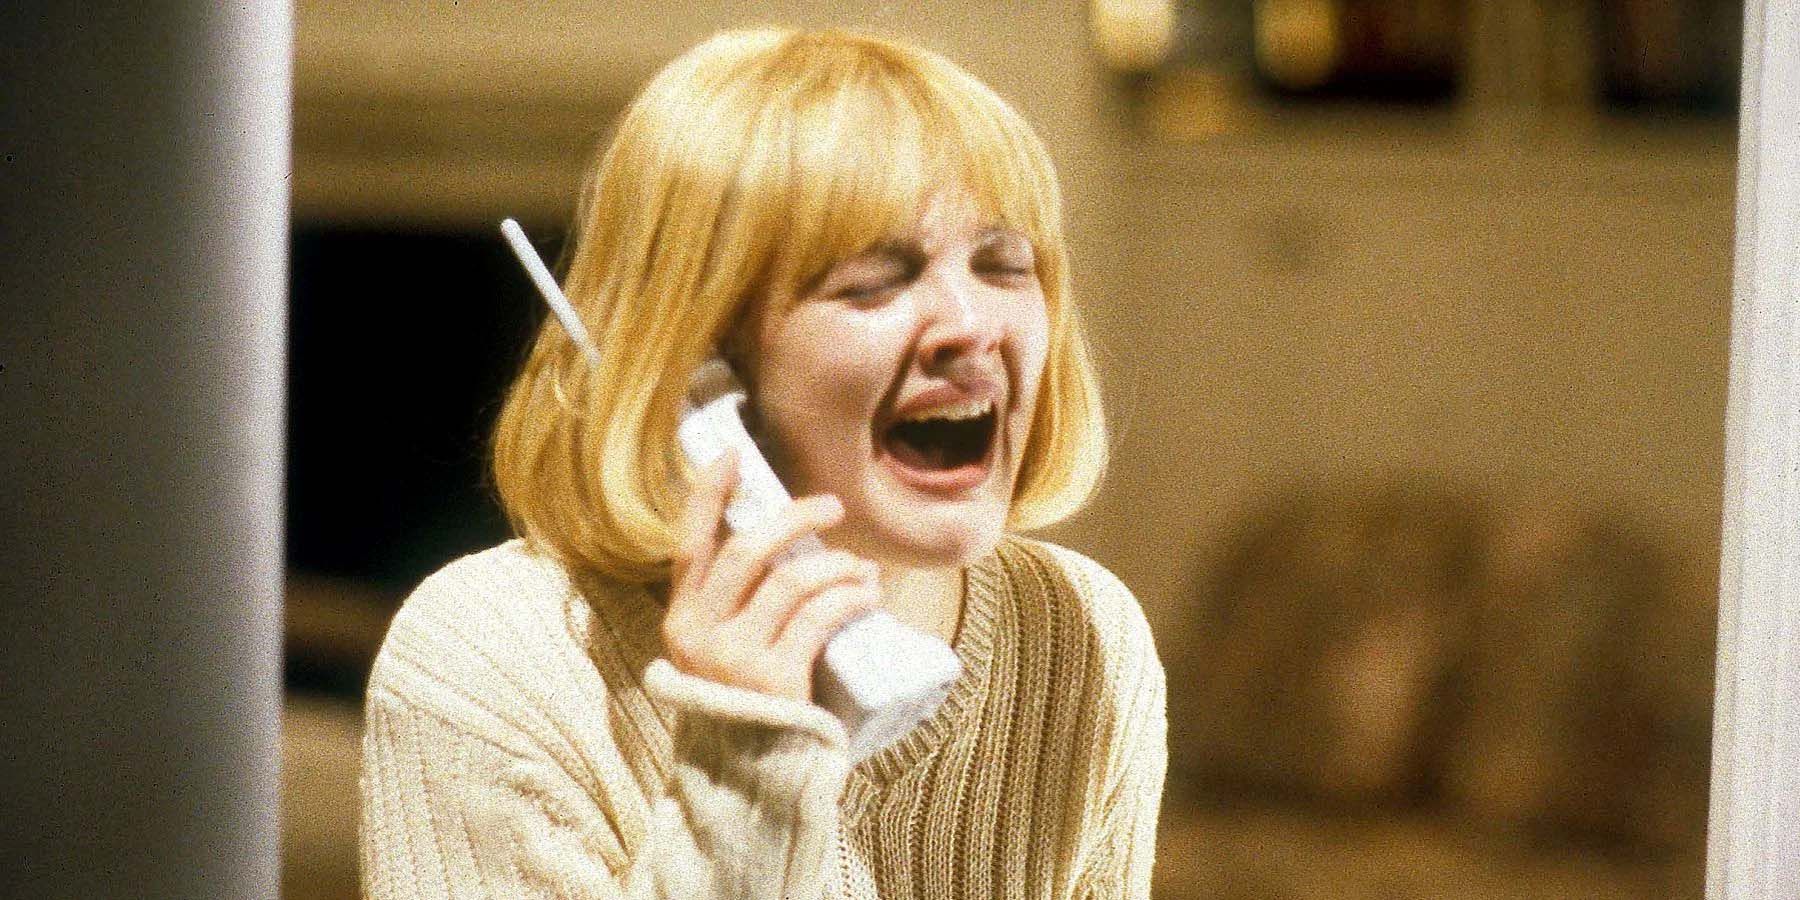 Drew Barrymoore as Casey Becker on the phone in Scream (1996)